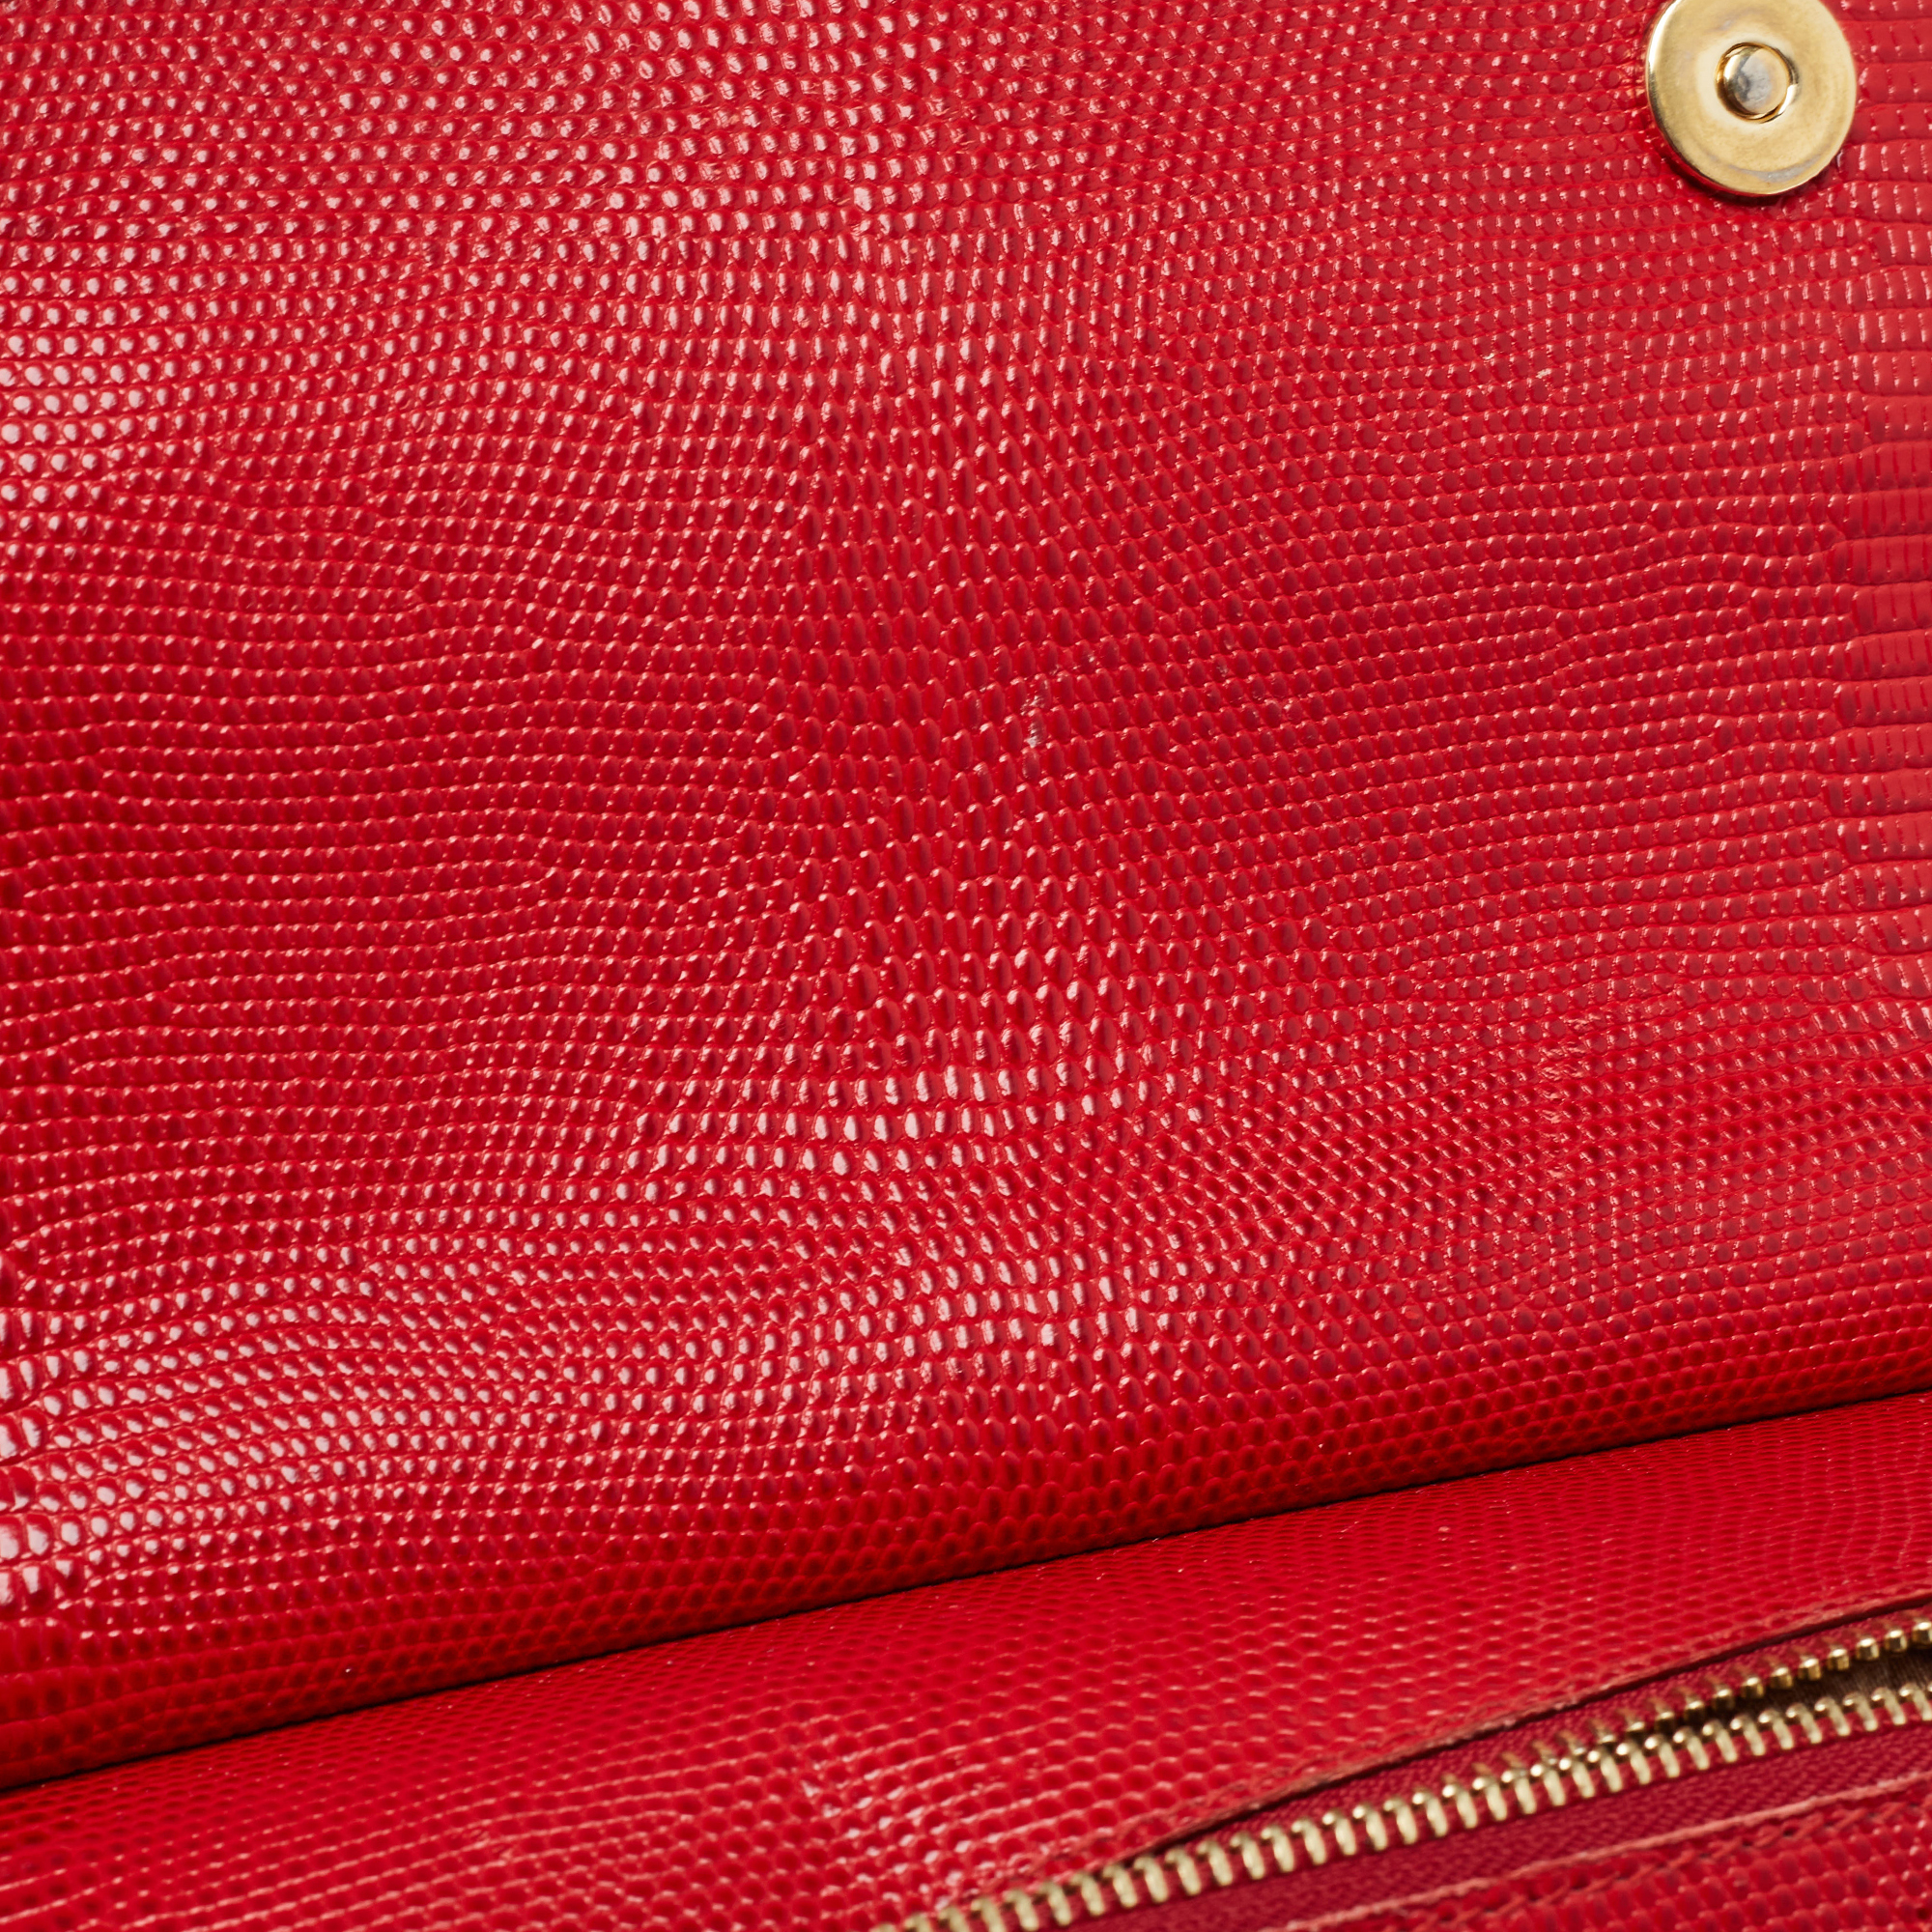 Dolce & Gabbana Red Leather Medium Miss Sicily Handle Bag